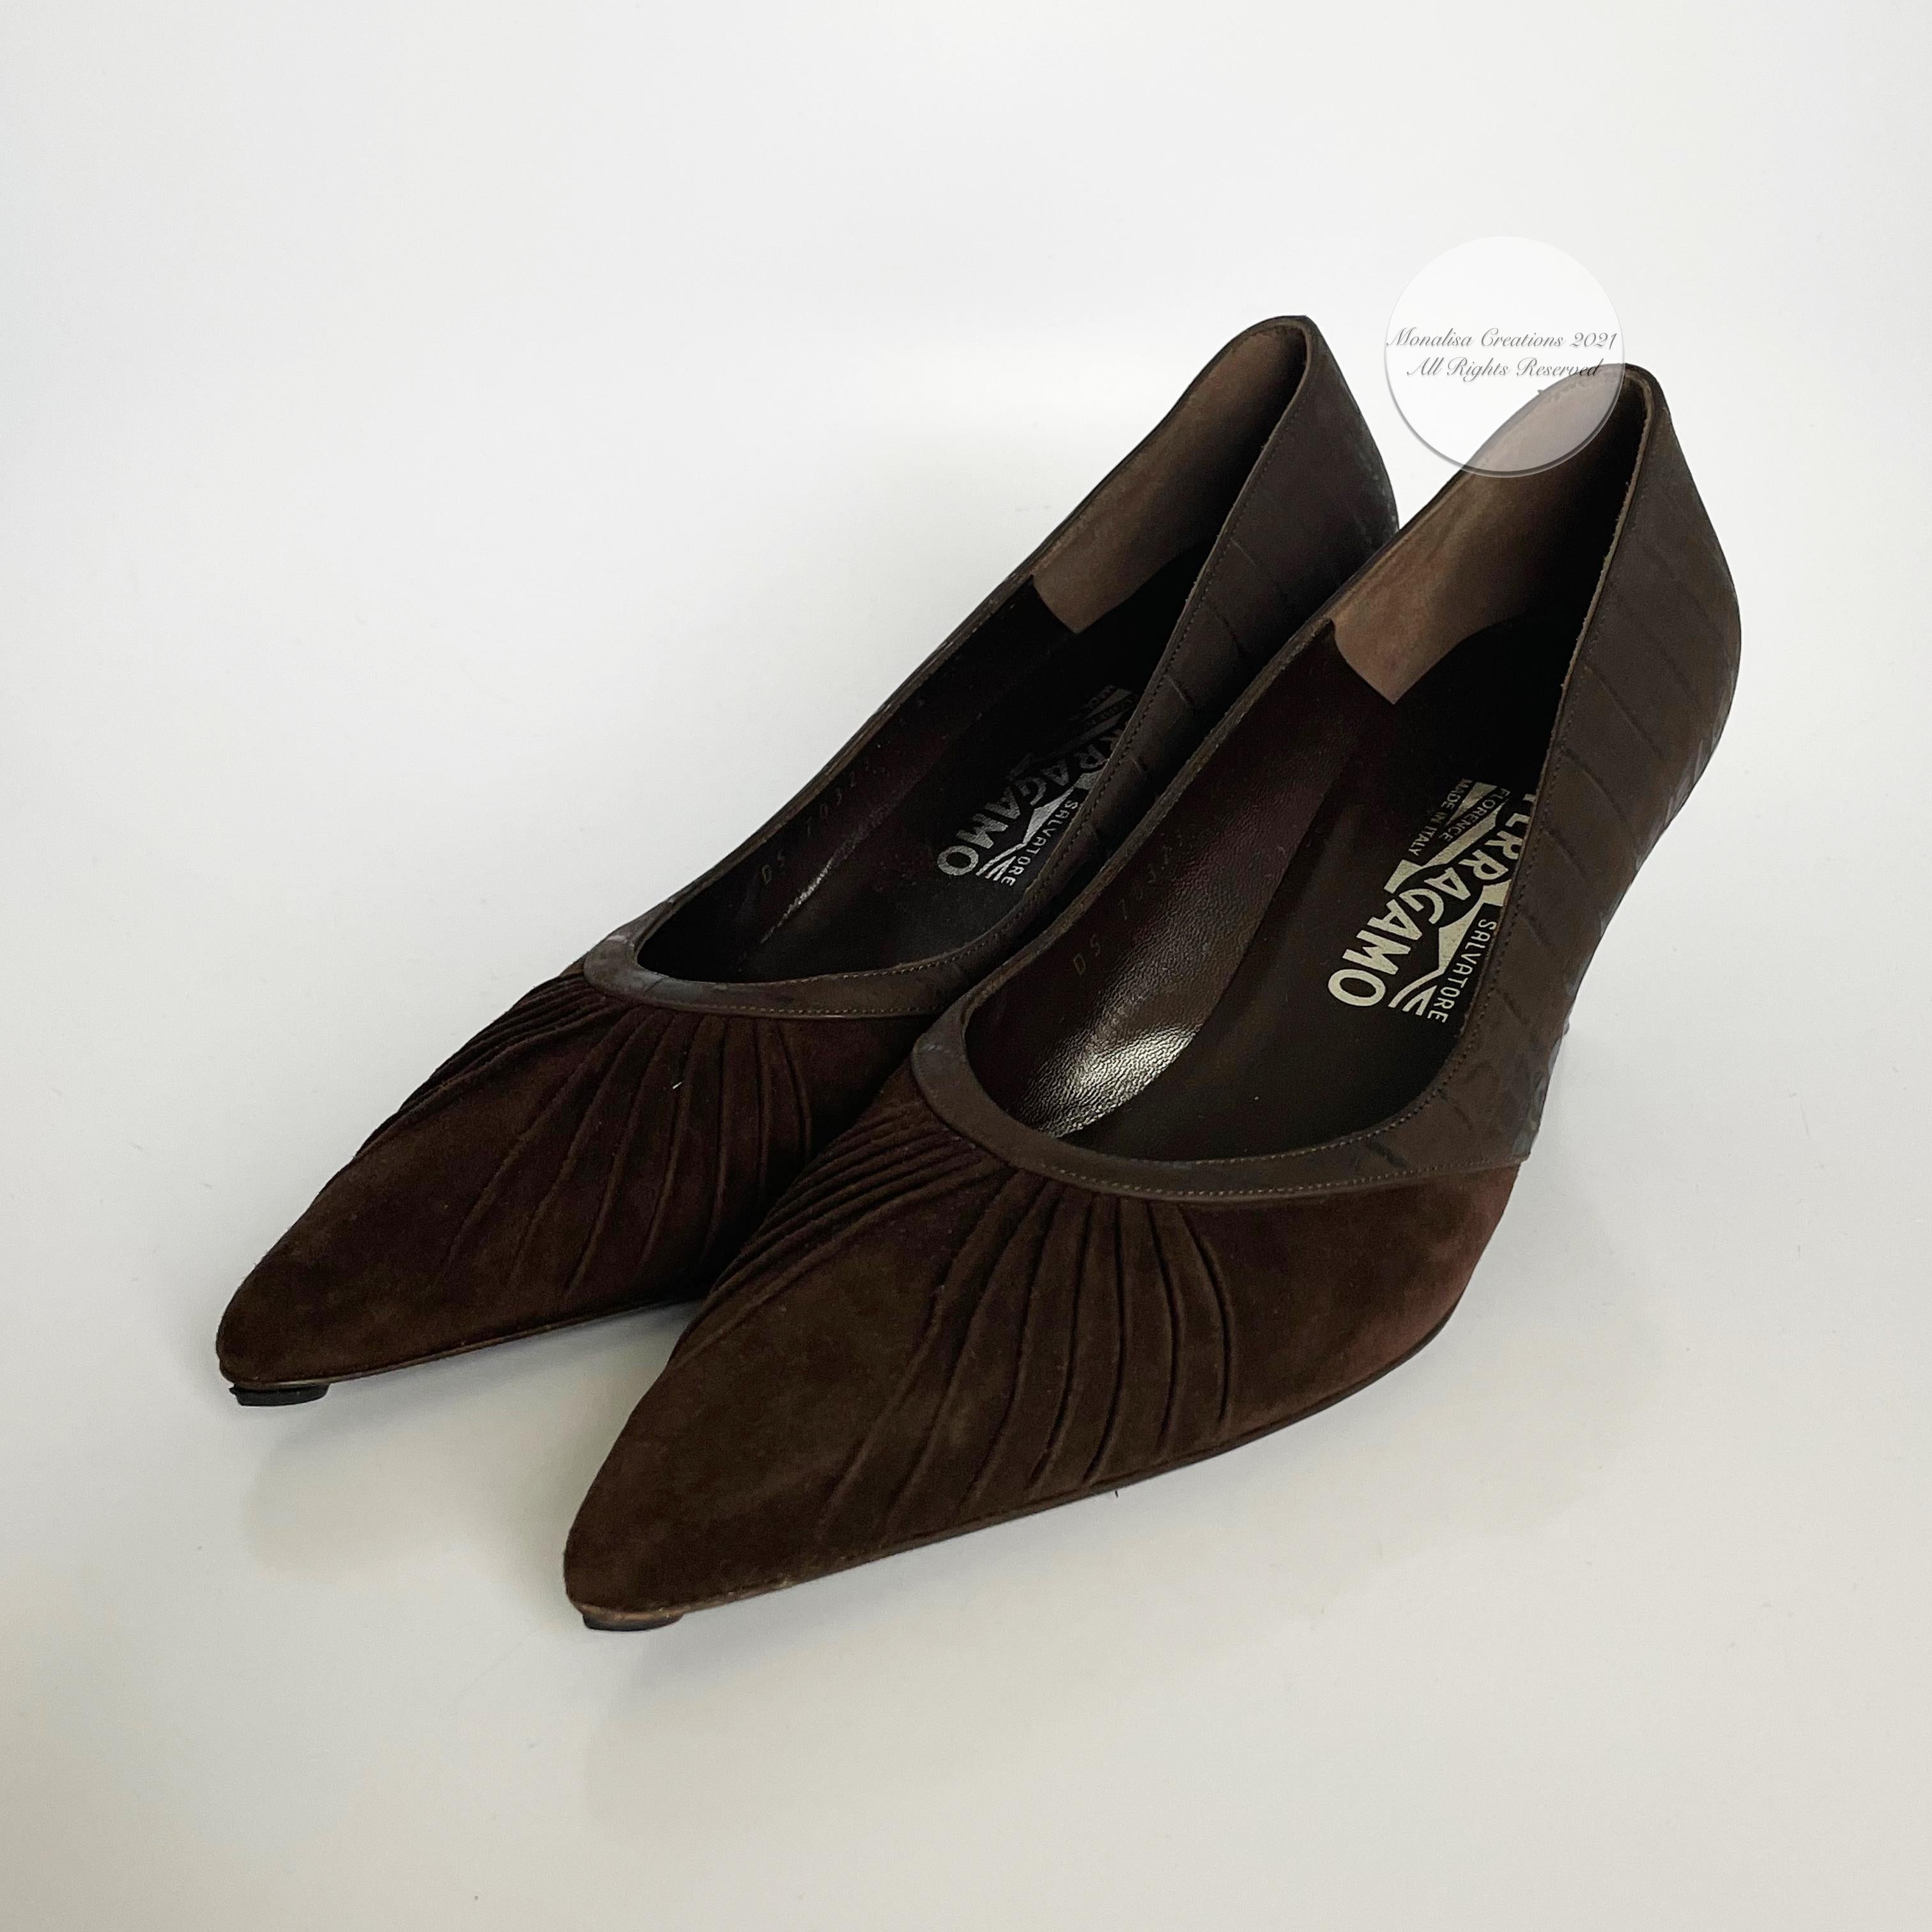 Black Salvatore Ferragamo Shoes Kitten Heels Suede Croco Stamp 7.5M Vintage 90s